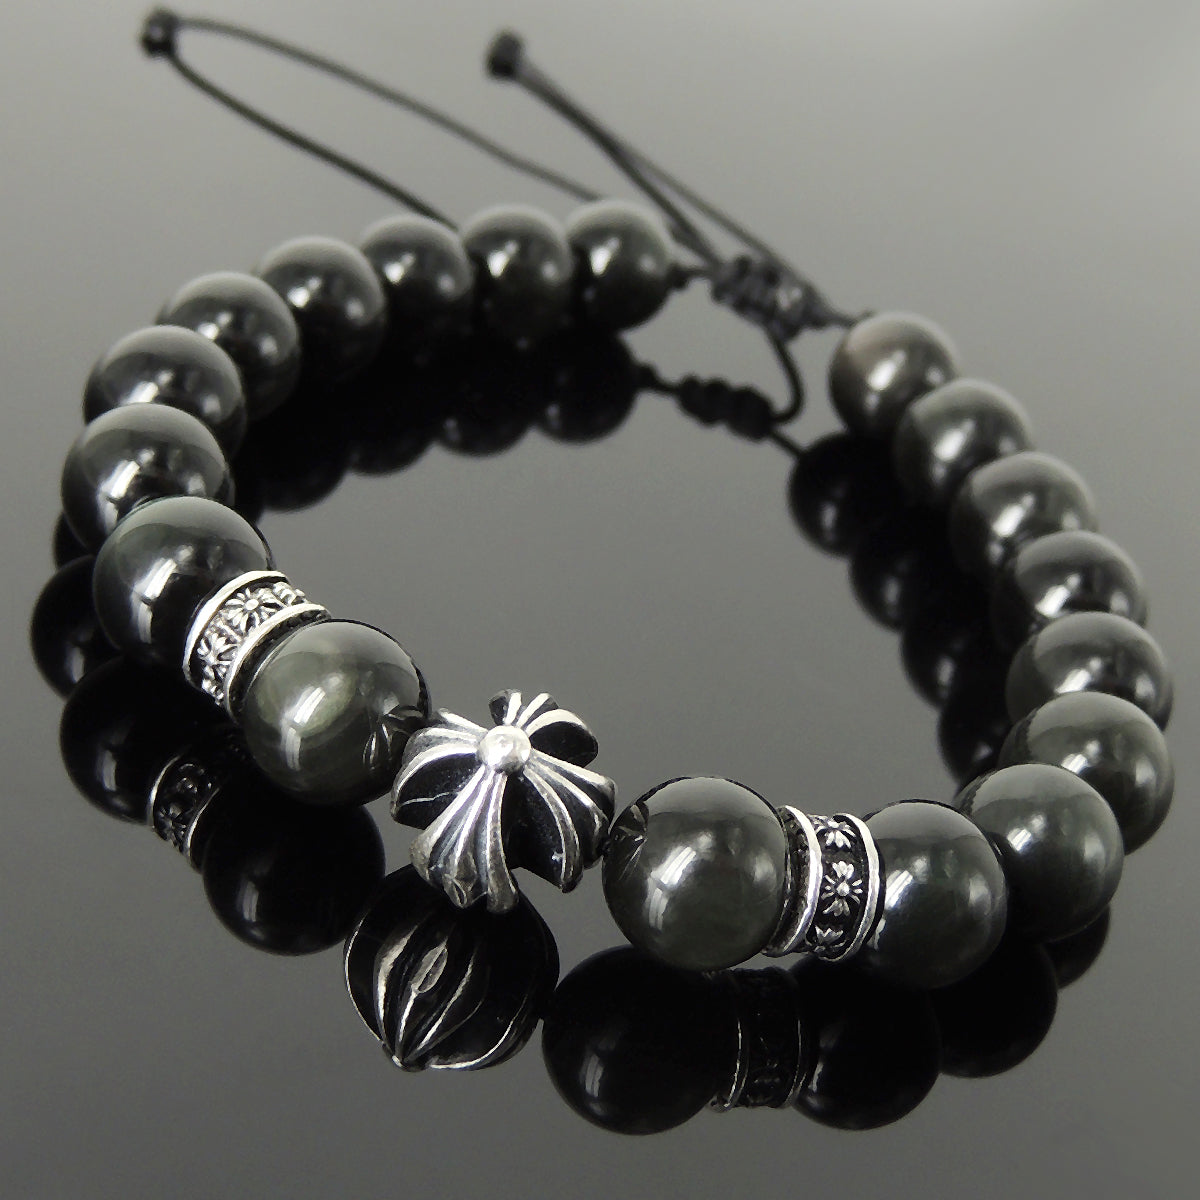 Handmade Cross Pattern Design Braided Bracelet Healing Rainbow Black Obsidian 10mm Gemstones for Grounding Conscious Meditation & Wellness with Genuine S925 Sterling Silver Beads - BR1511